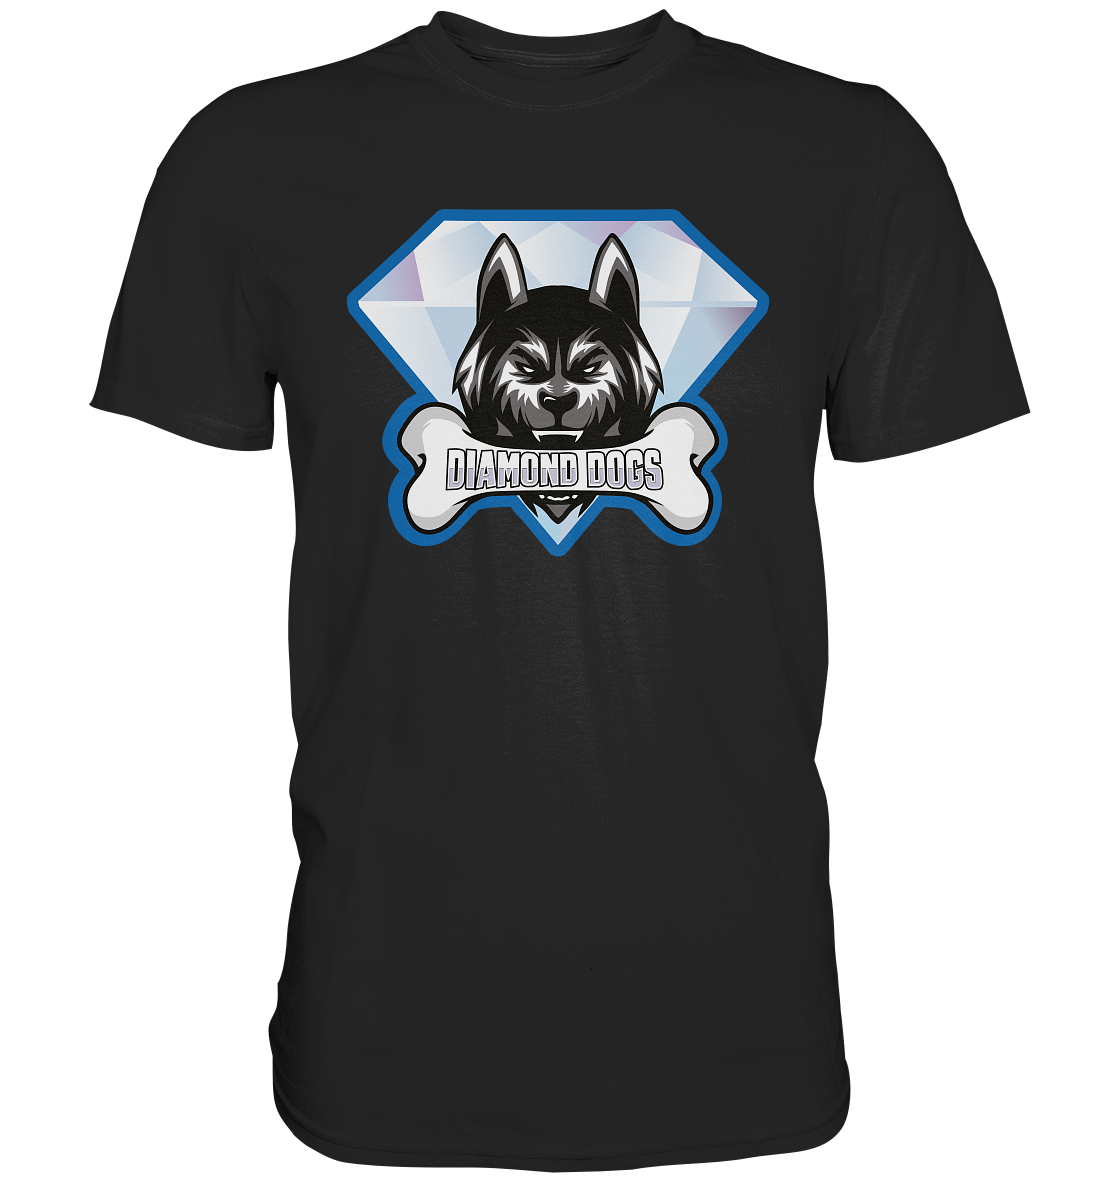 DIAMOND DOGS - Basic Shirt